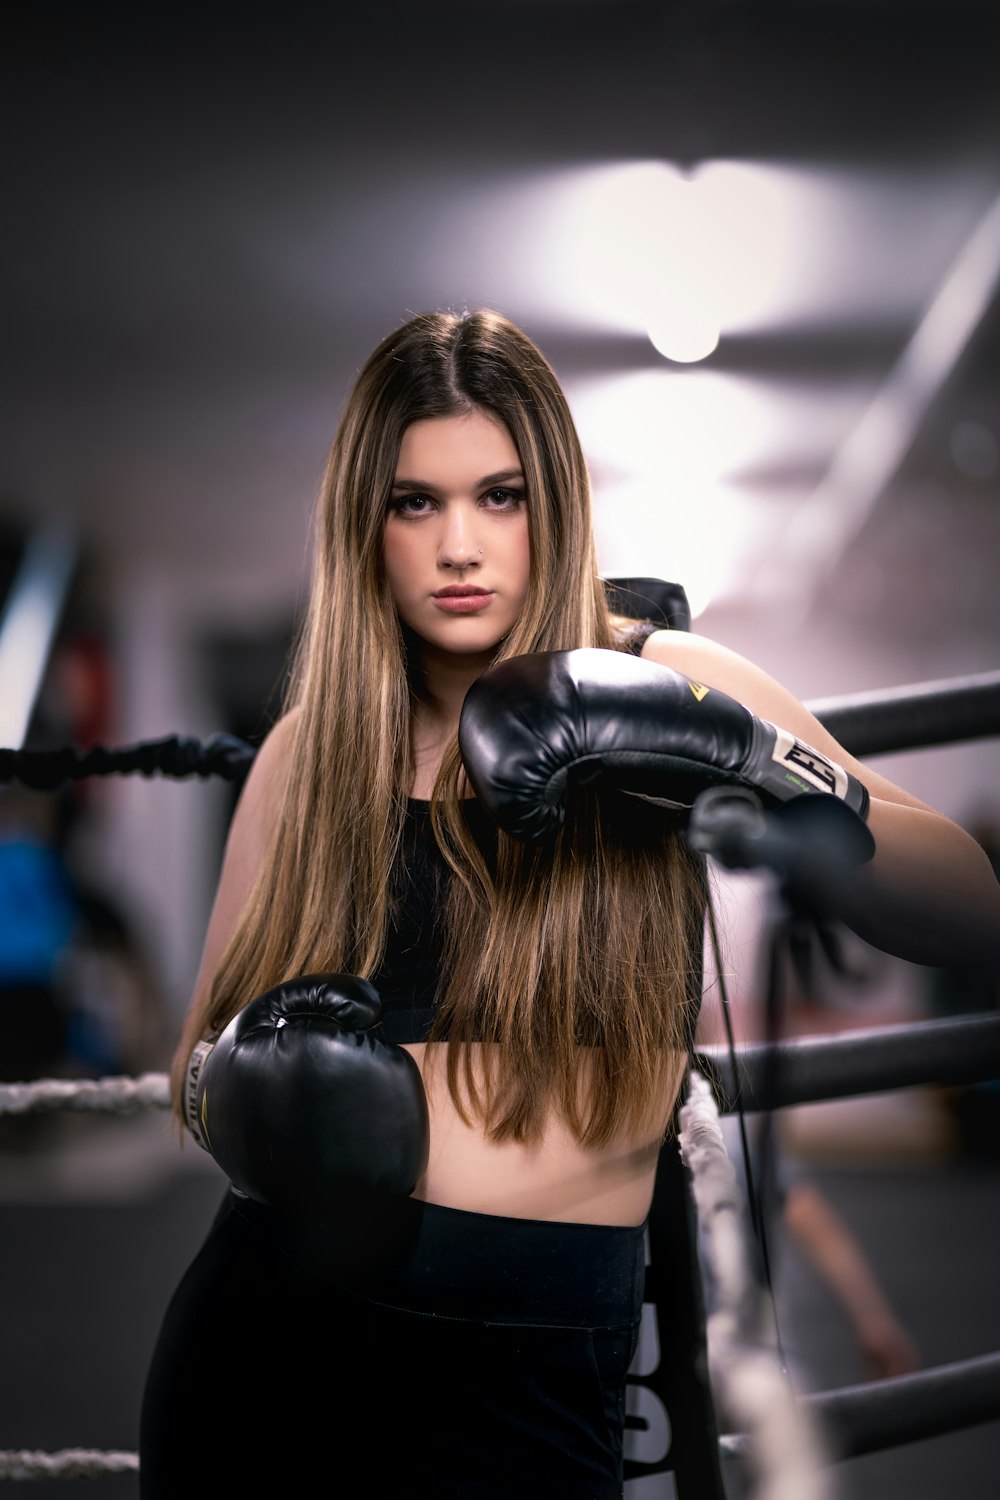 a beautiful young woman wearing boxing gloves